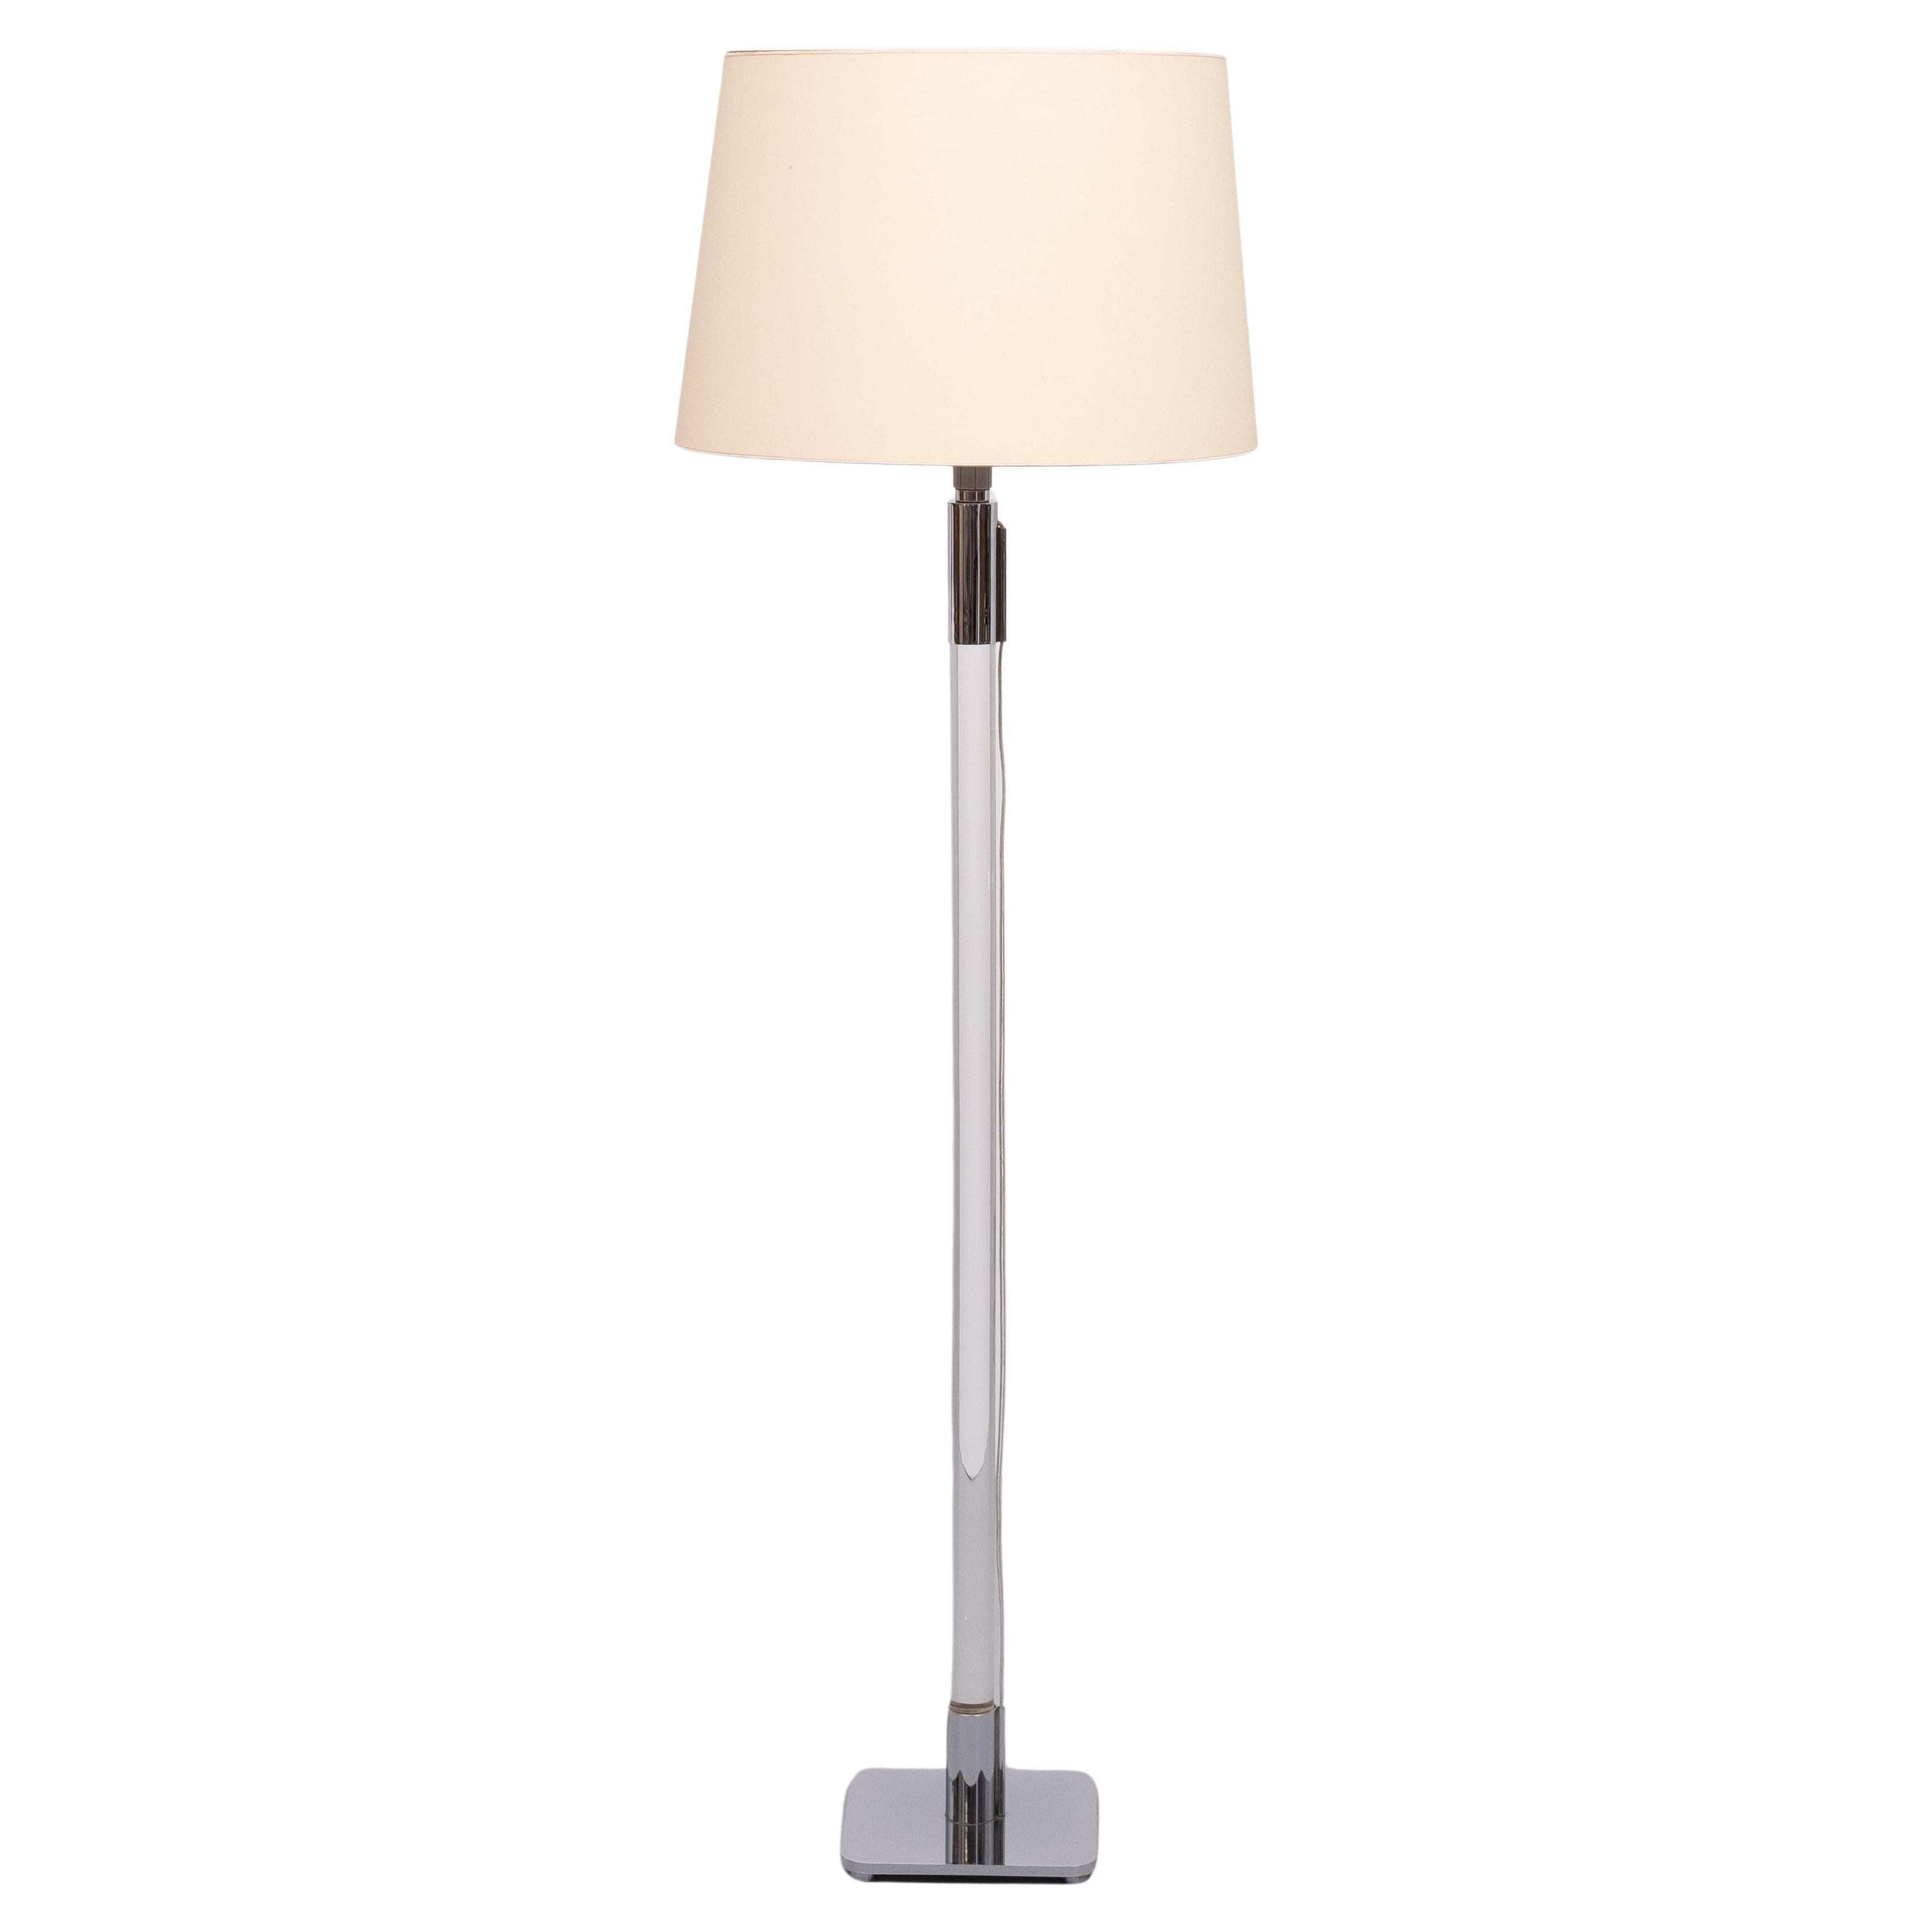 Metalarte Spain Floor Lamps